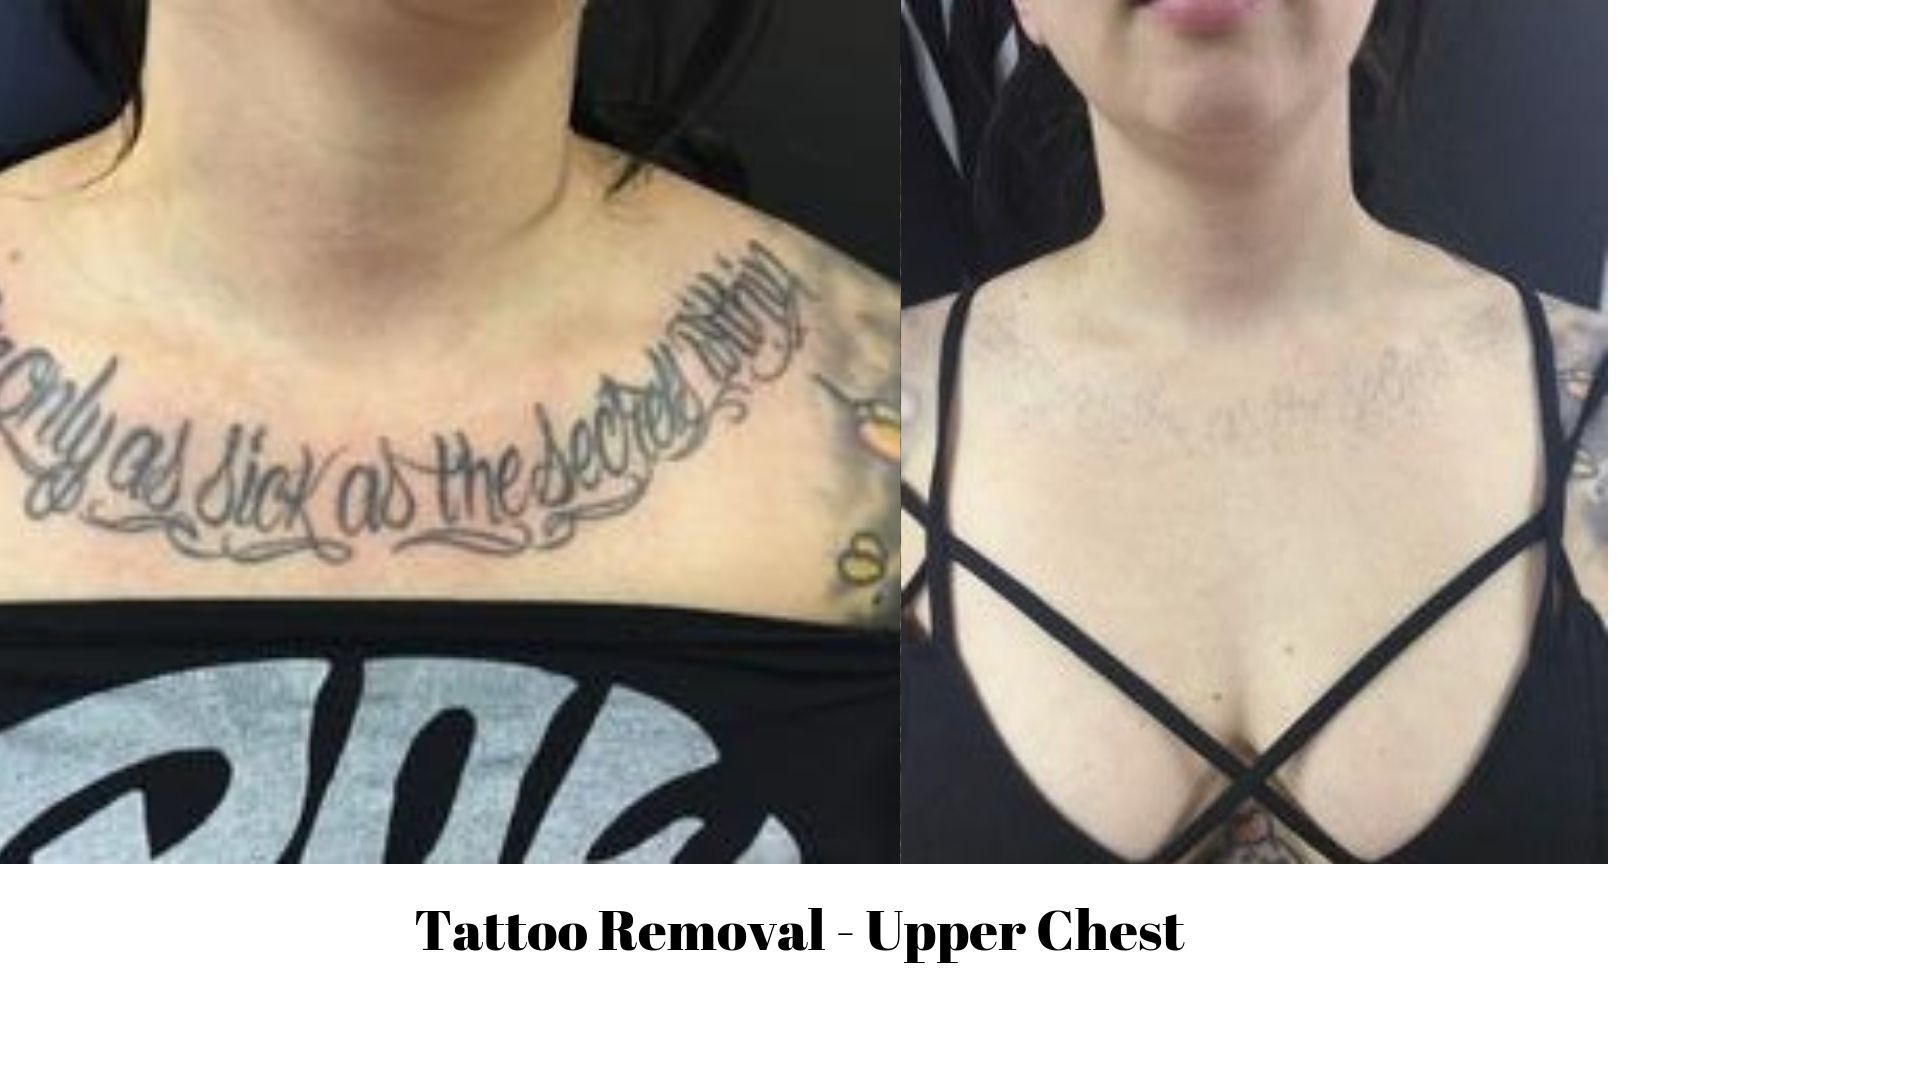 Enlighten Laser - Tattoo treatment video - YouTube